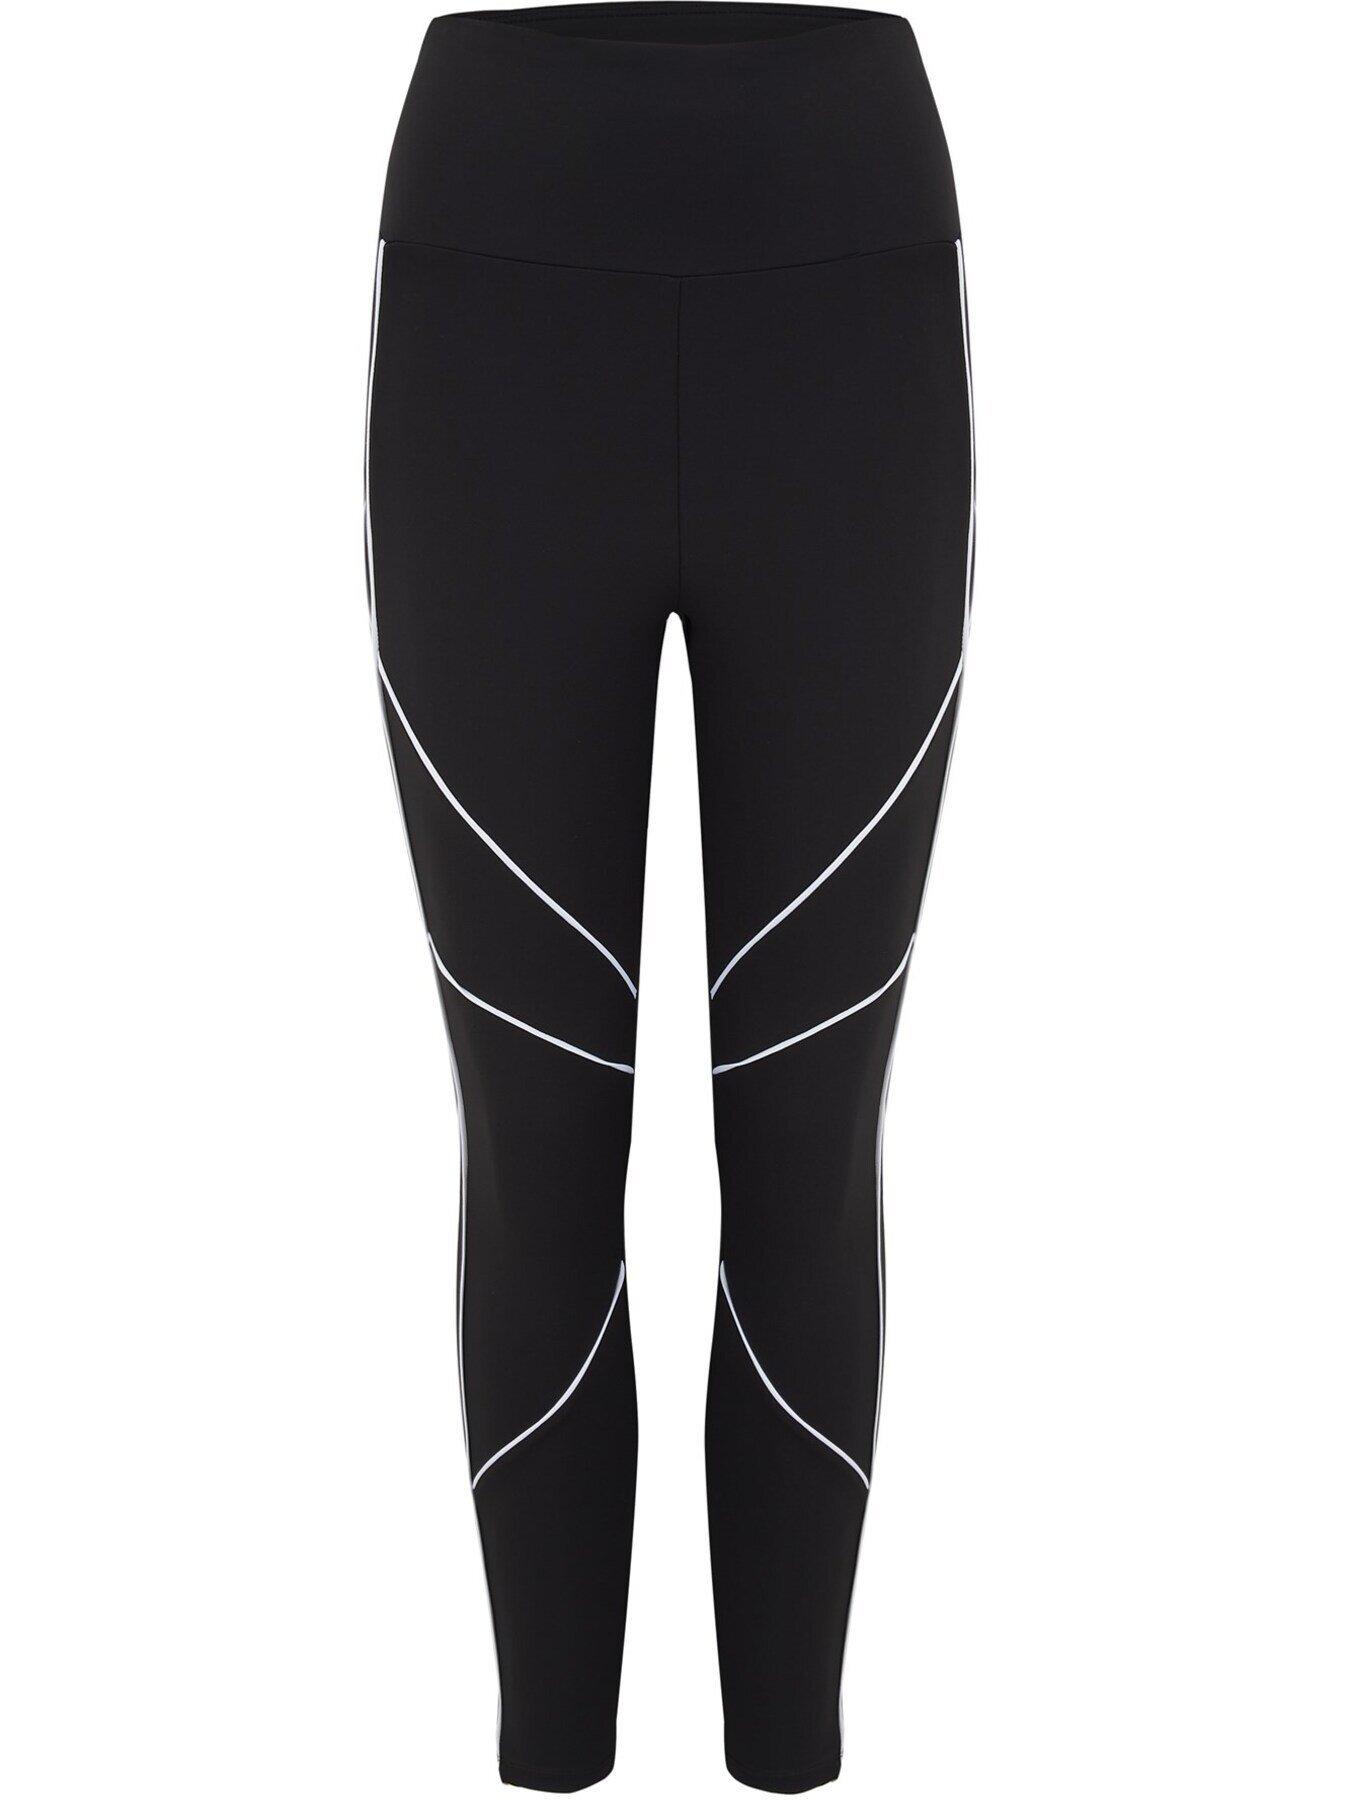 Pour Moi Energy Colour Block Full Length Sports Legging - Black/Multi